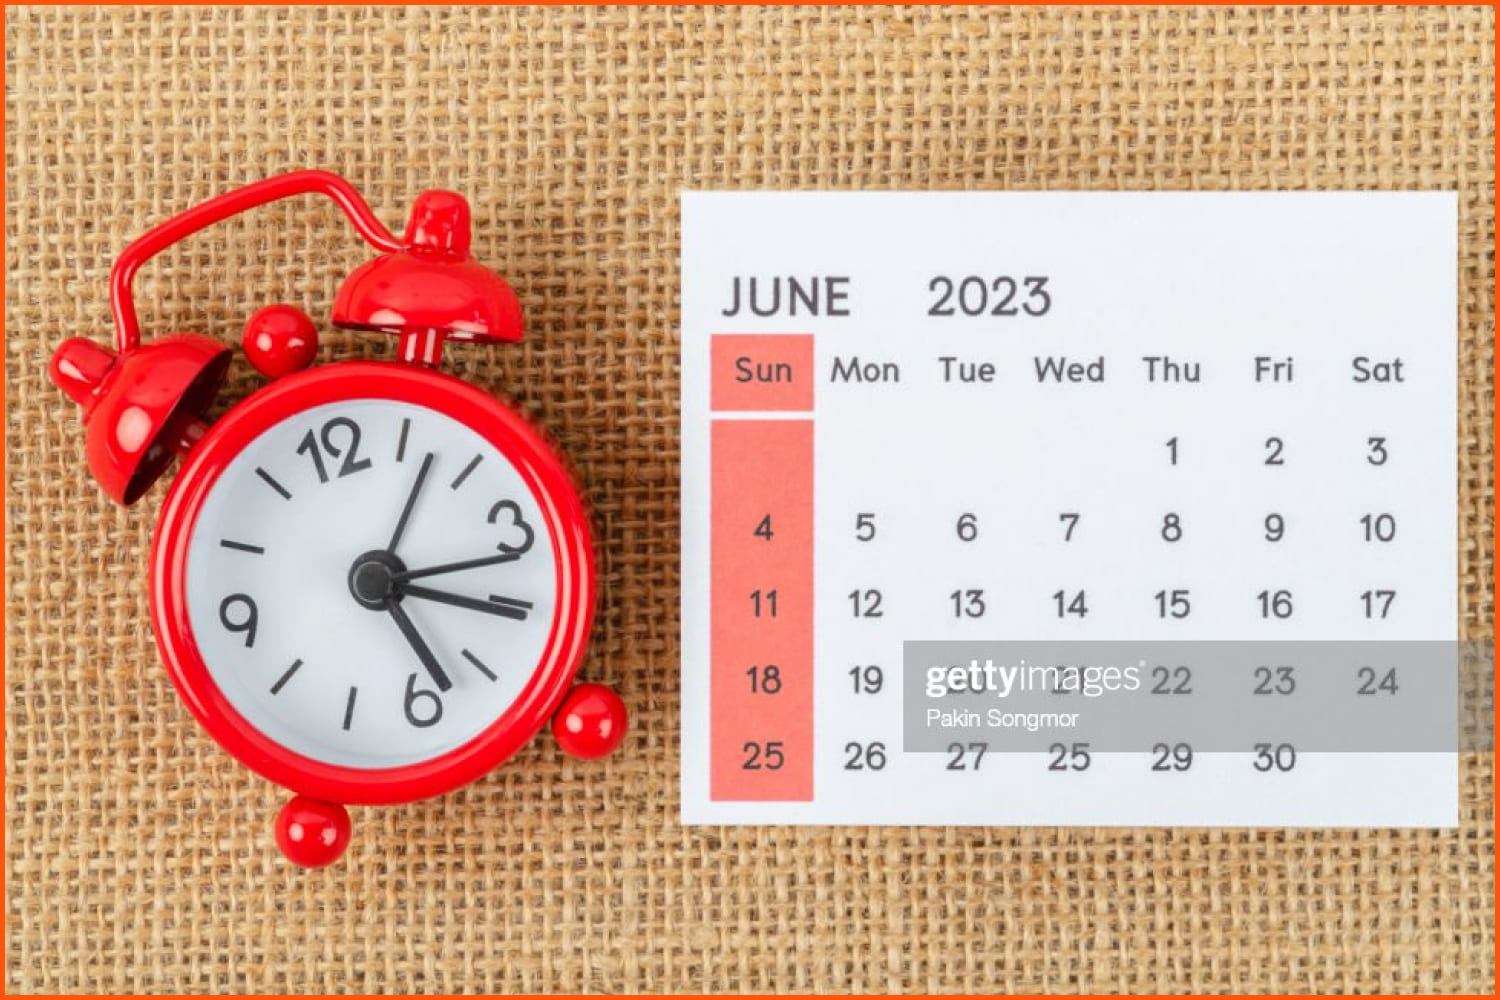 June calendar and big red alarm clock next to it.